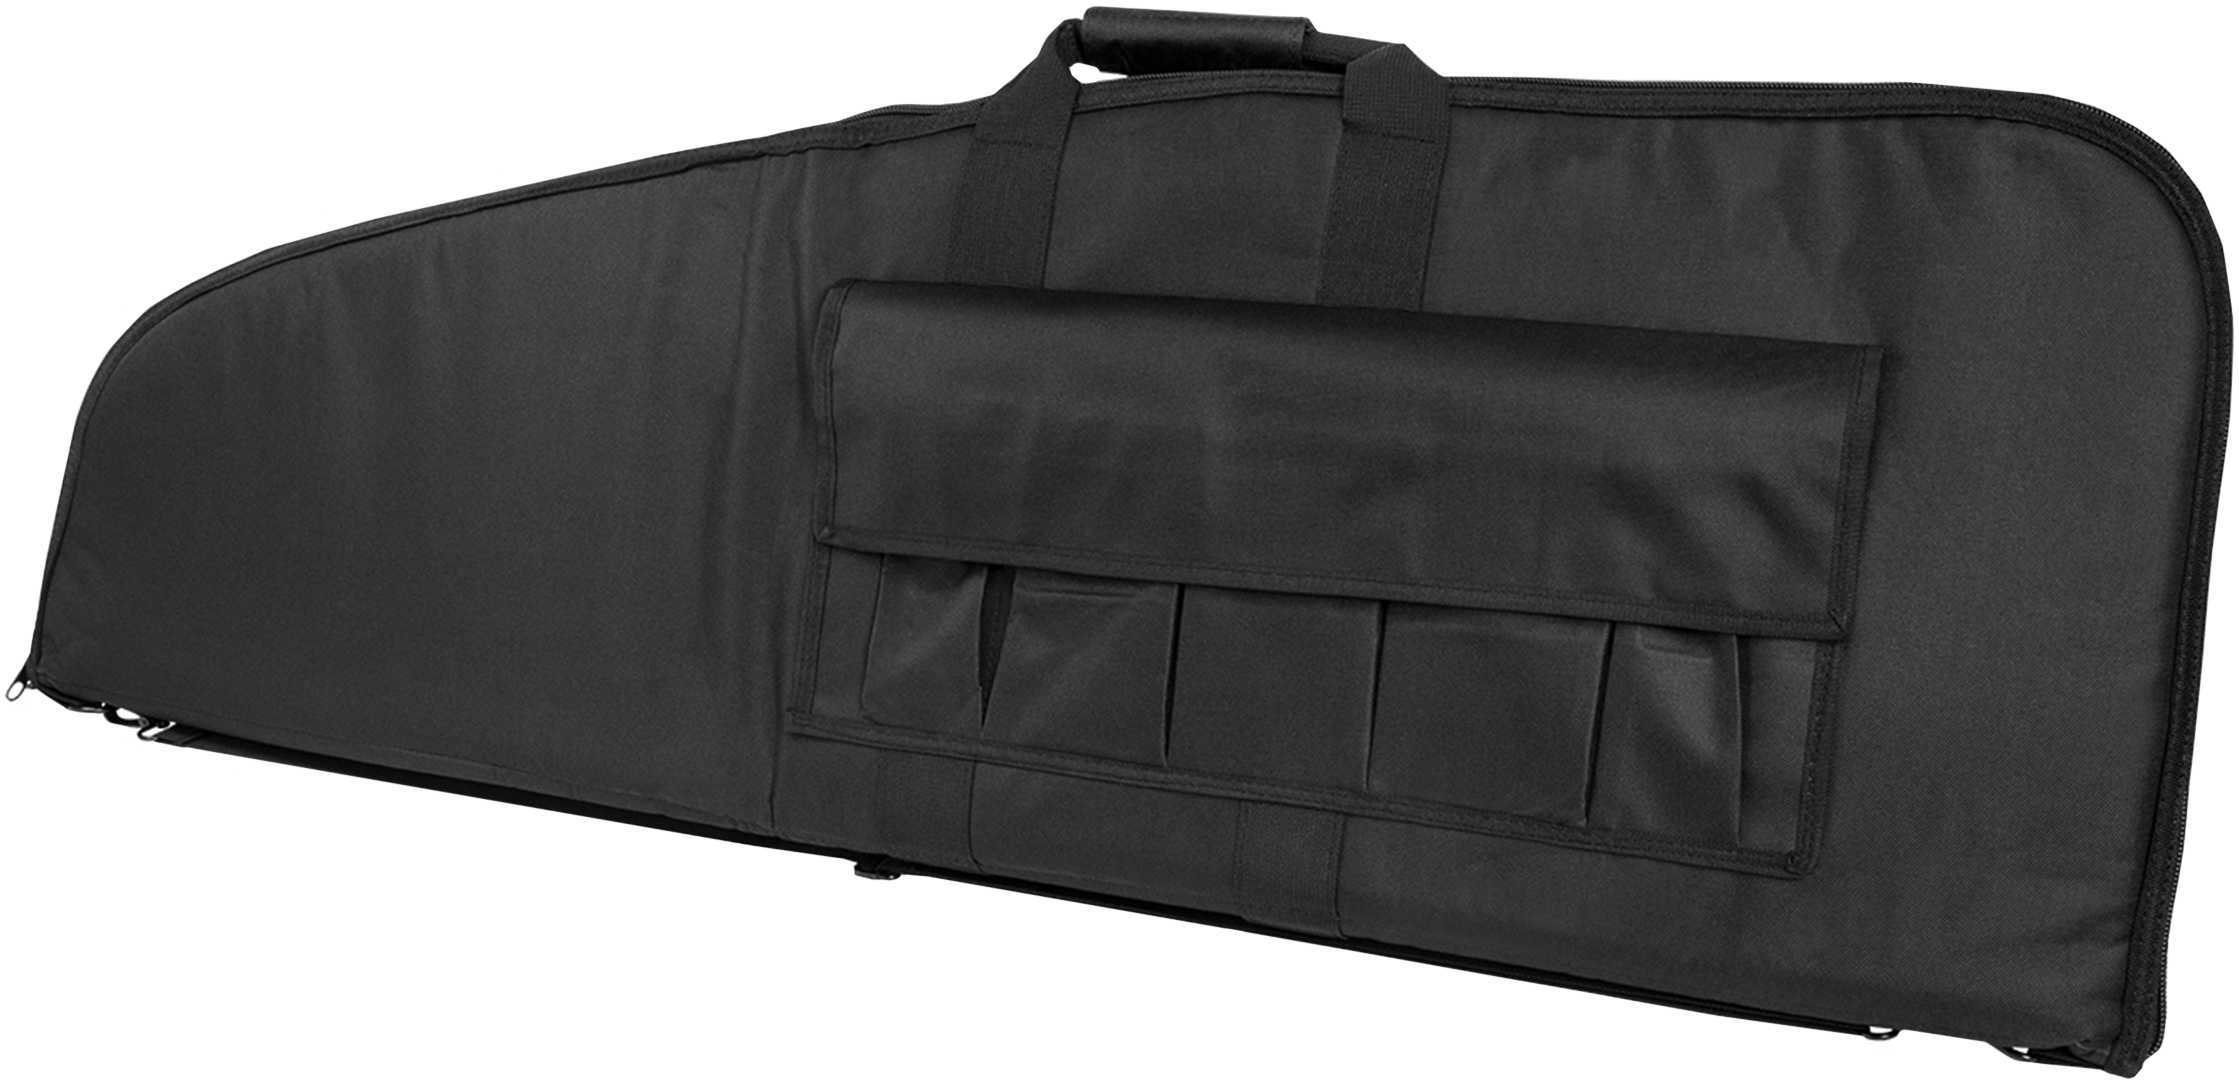 NcStar Scoped Gun Case, Black (42"L x 16"H) CVS2907-42